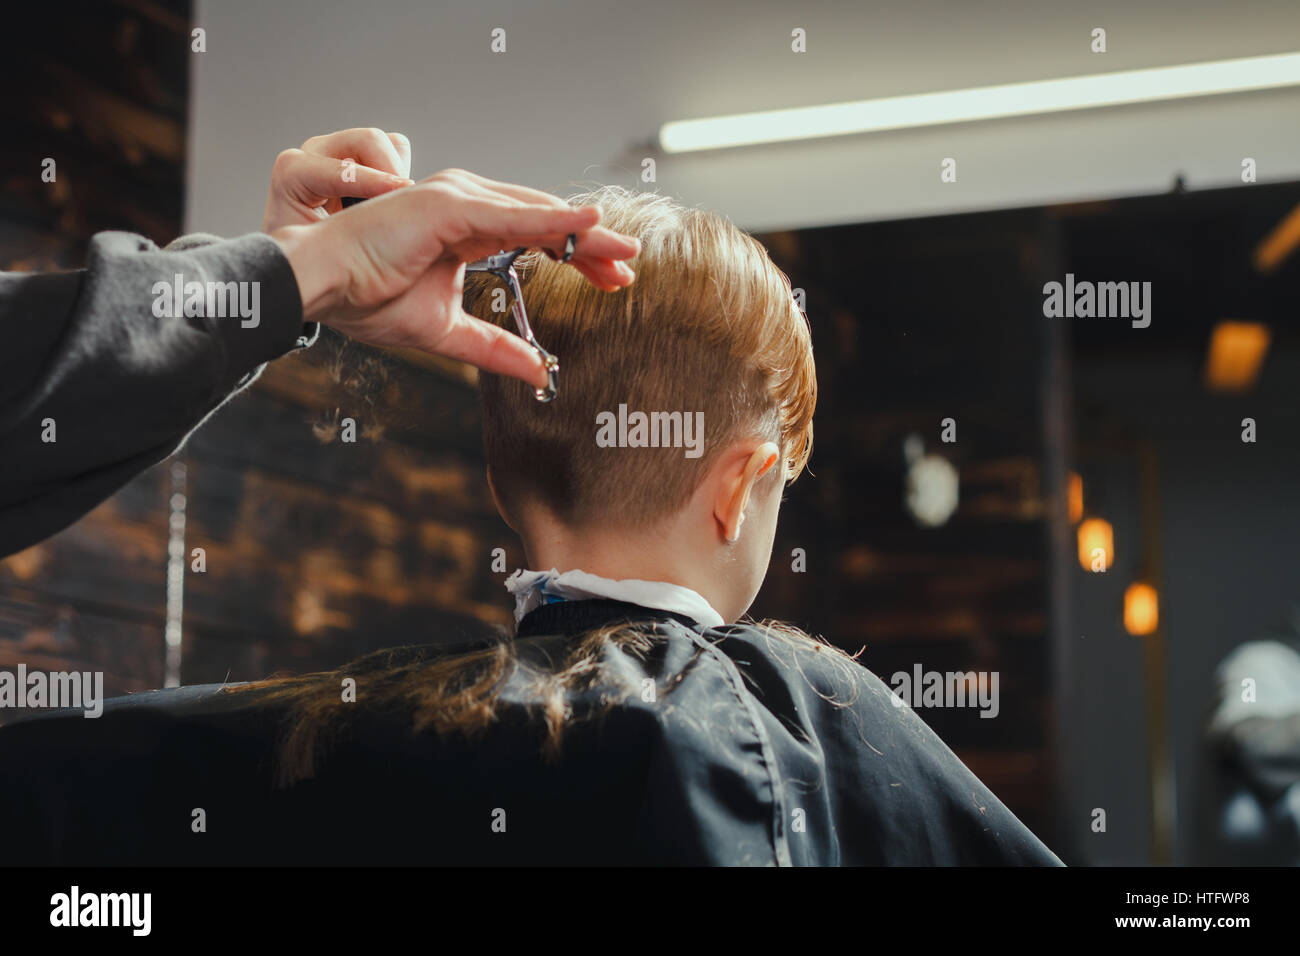 Little Boy Getting Haircut By Barber. Barbershop Theme Stock Photo